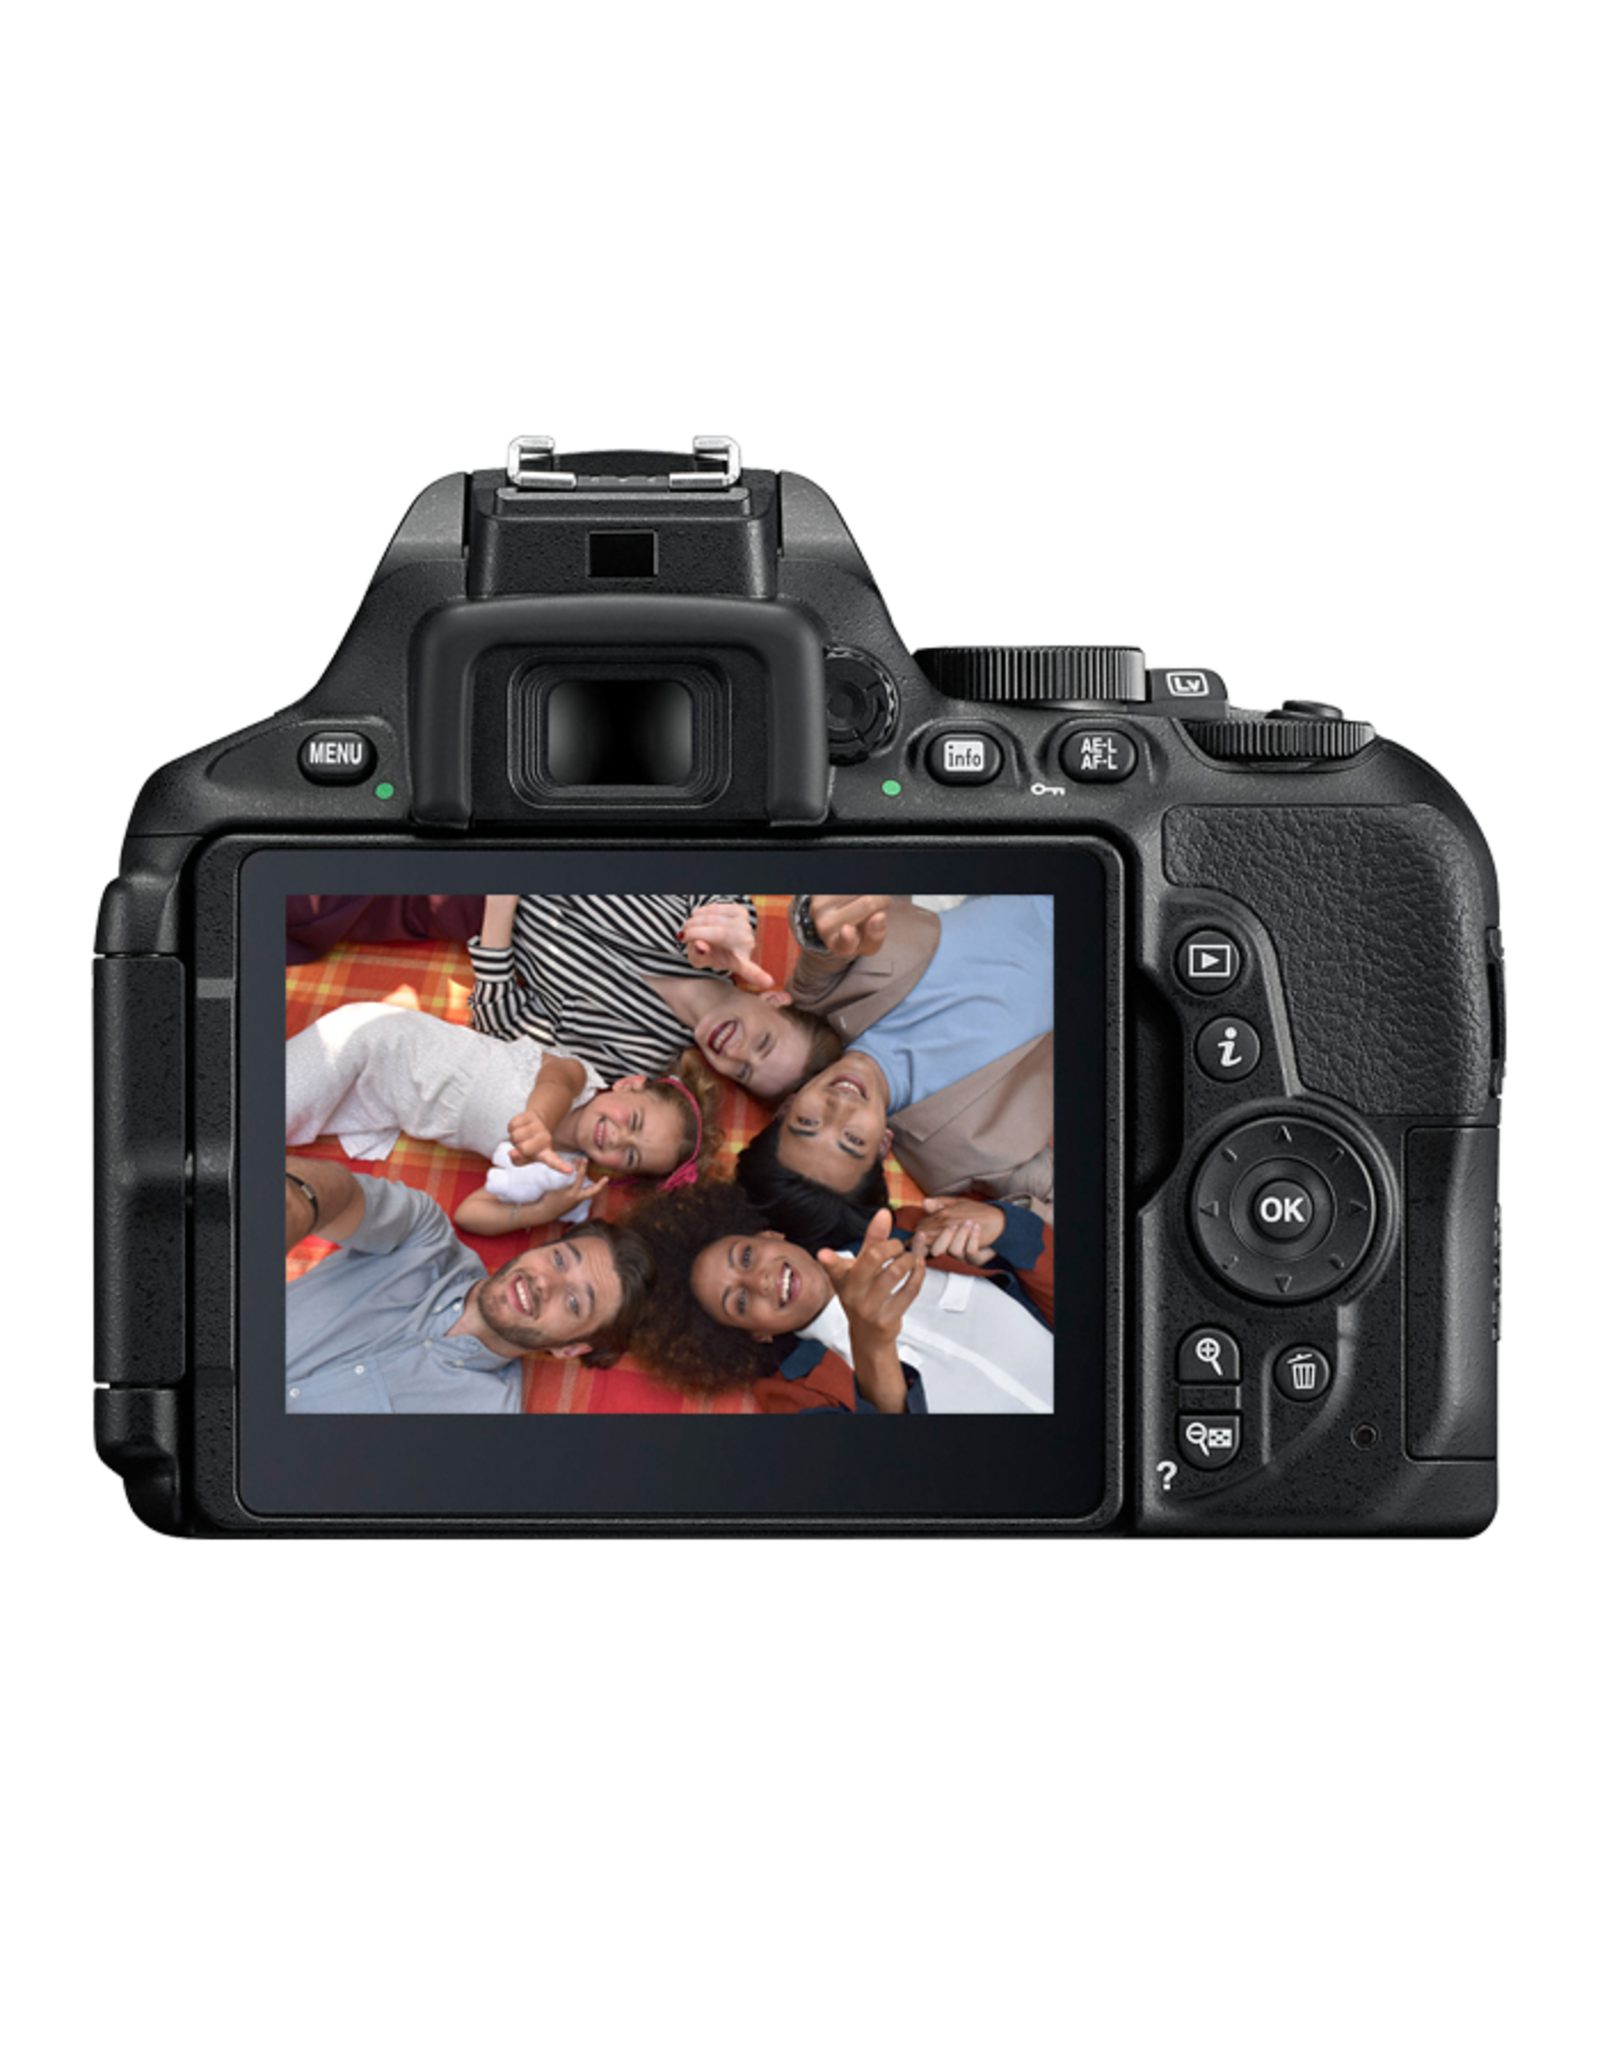 Nikon D5600 DSLR Camera with 18-55mm Lens (Black) - Camera